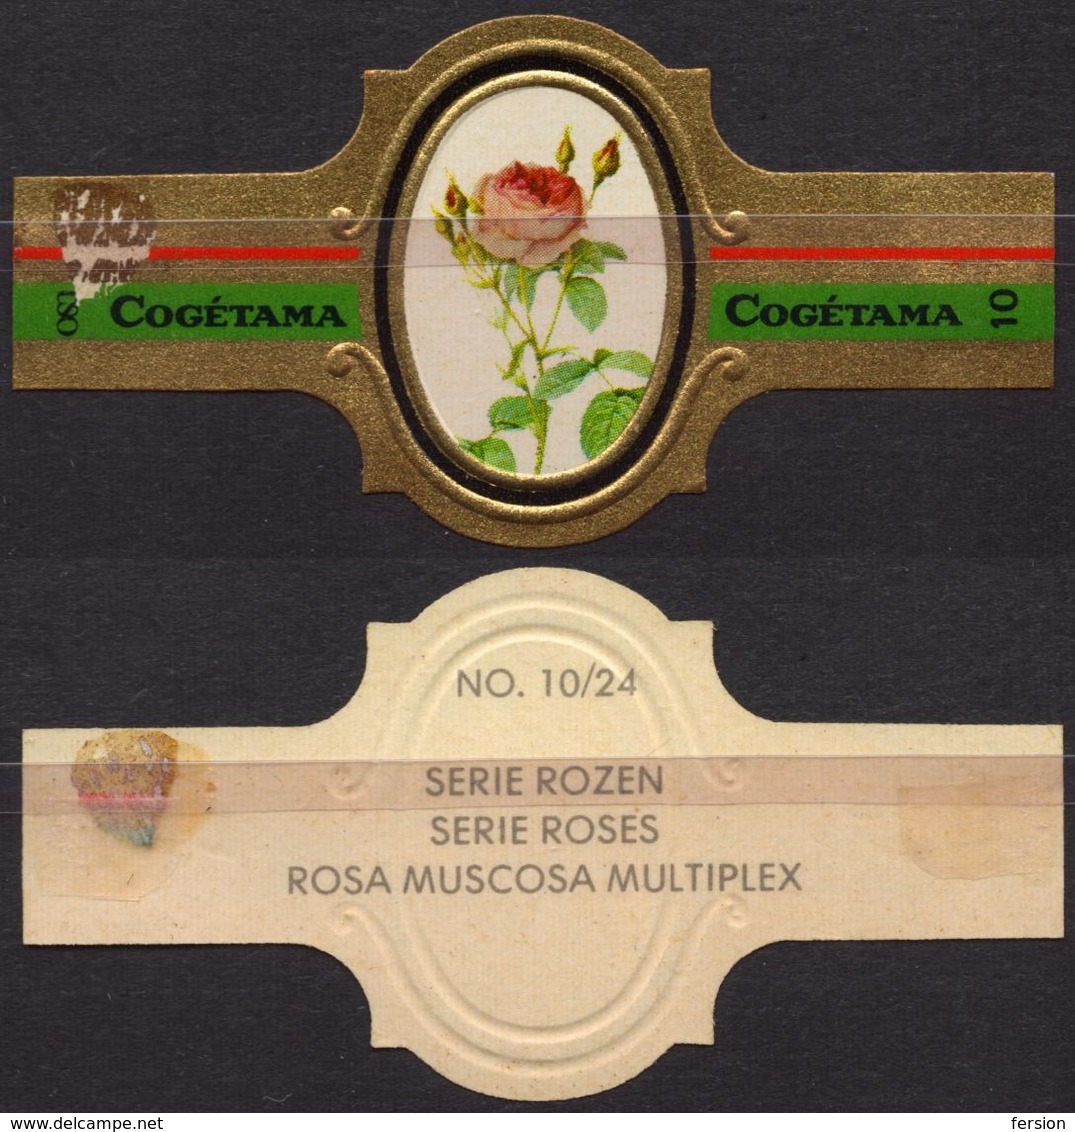 Muscosa Multiplex - ROSE ROSES - Netherlands Holland / Cogétama / CIGAR CIGARS Label Vignette - Etiketten